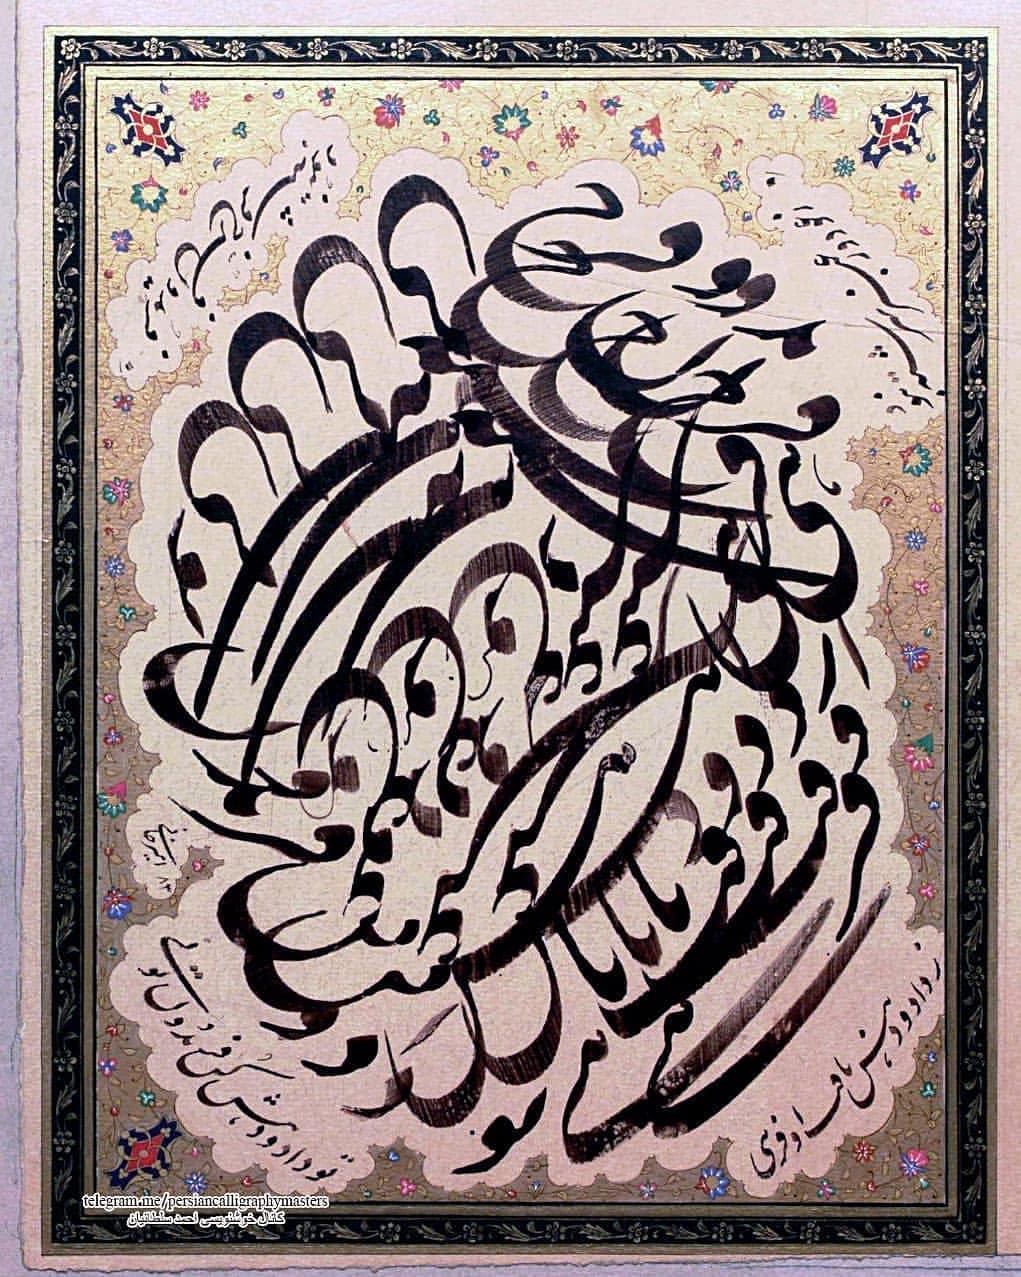 Download Photo Kaligrafi اثر زیبای استاد امیرخانی
.
.
.
.
.
.
.
#زیبا 
#قرآن 
#اسلام 
#هنر #هنرمند
#ثلث #…- Vahedi Masoud